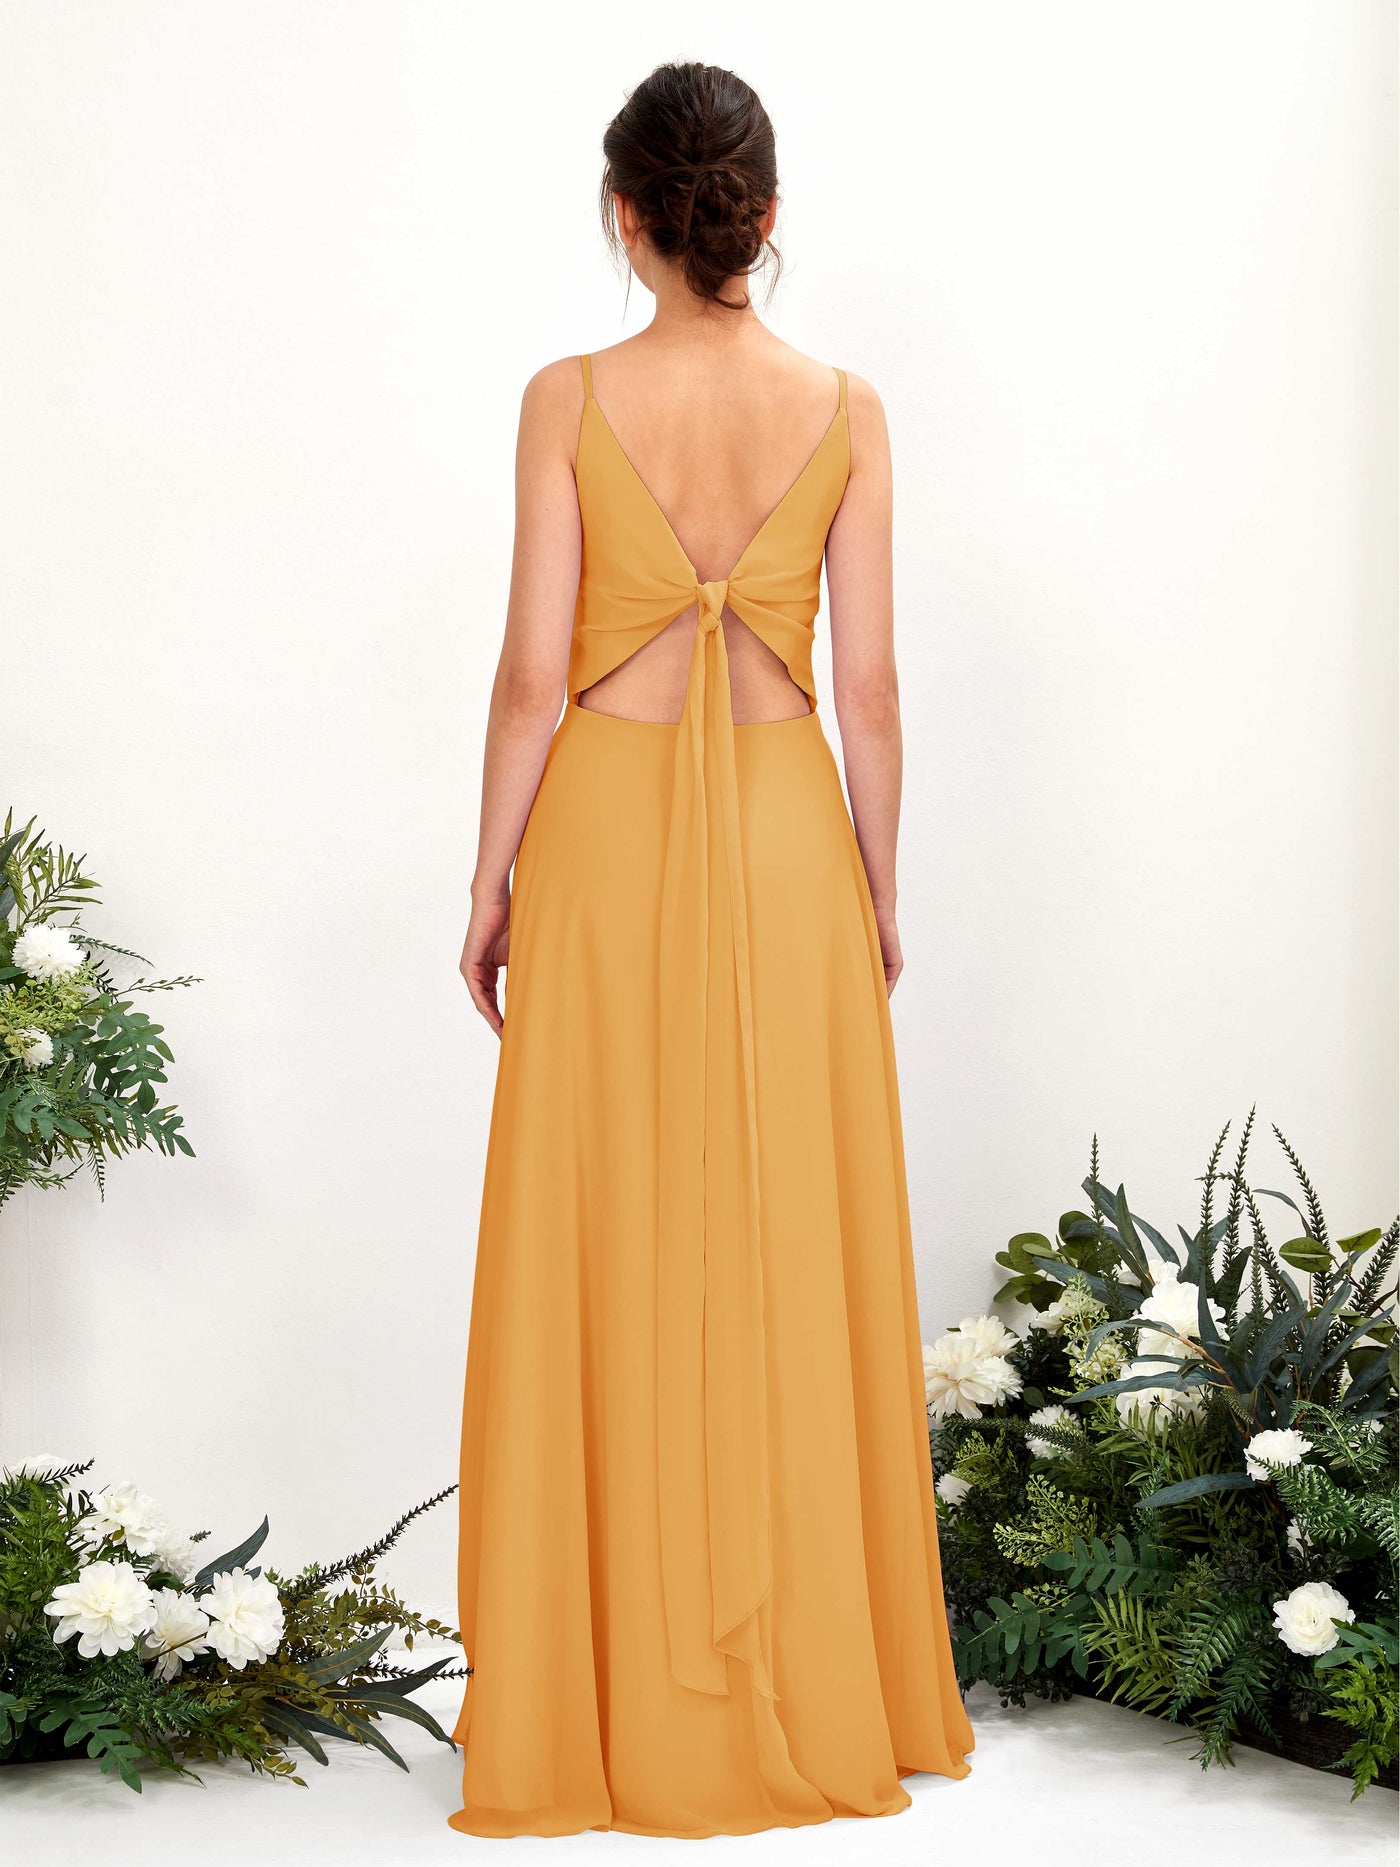 Mango Bridesmaid Dresses Bridesmaid Dress A-line Chiffon Spaghetti-straps Full Length Sleeveless Wedding Party Dress (81220602)#color_mango